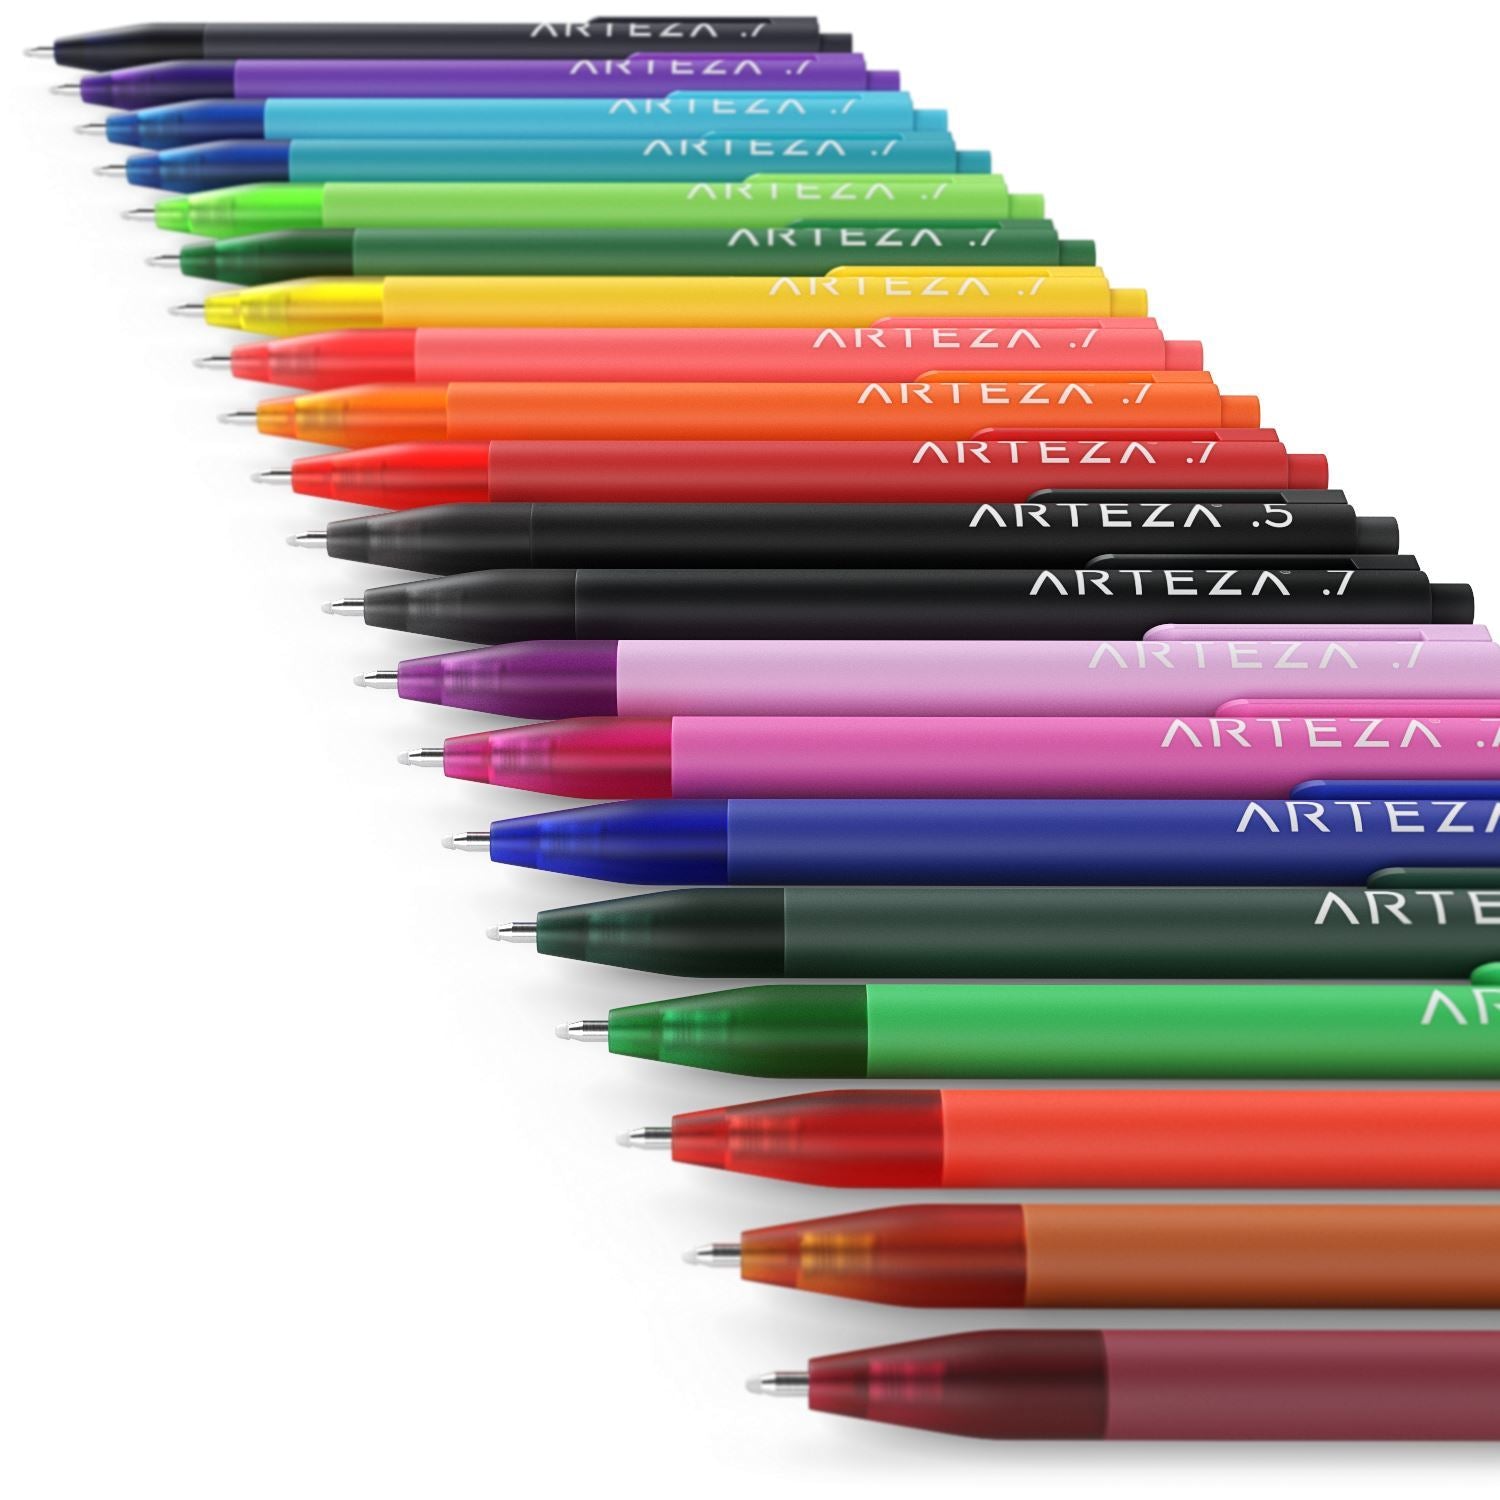 Arteza Glitter Gel Pens - 14 Pack